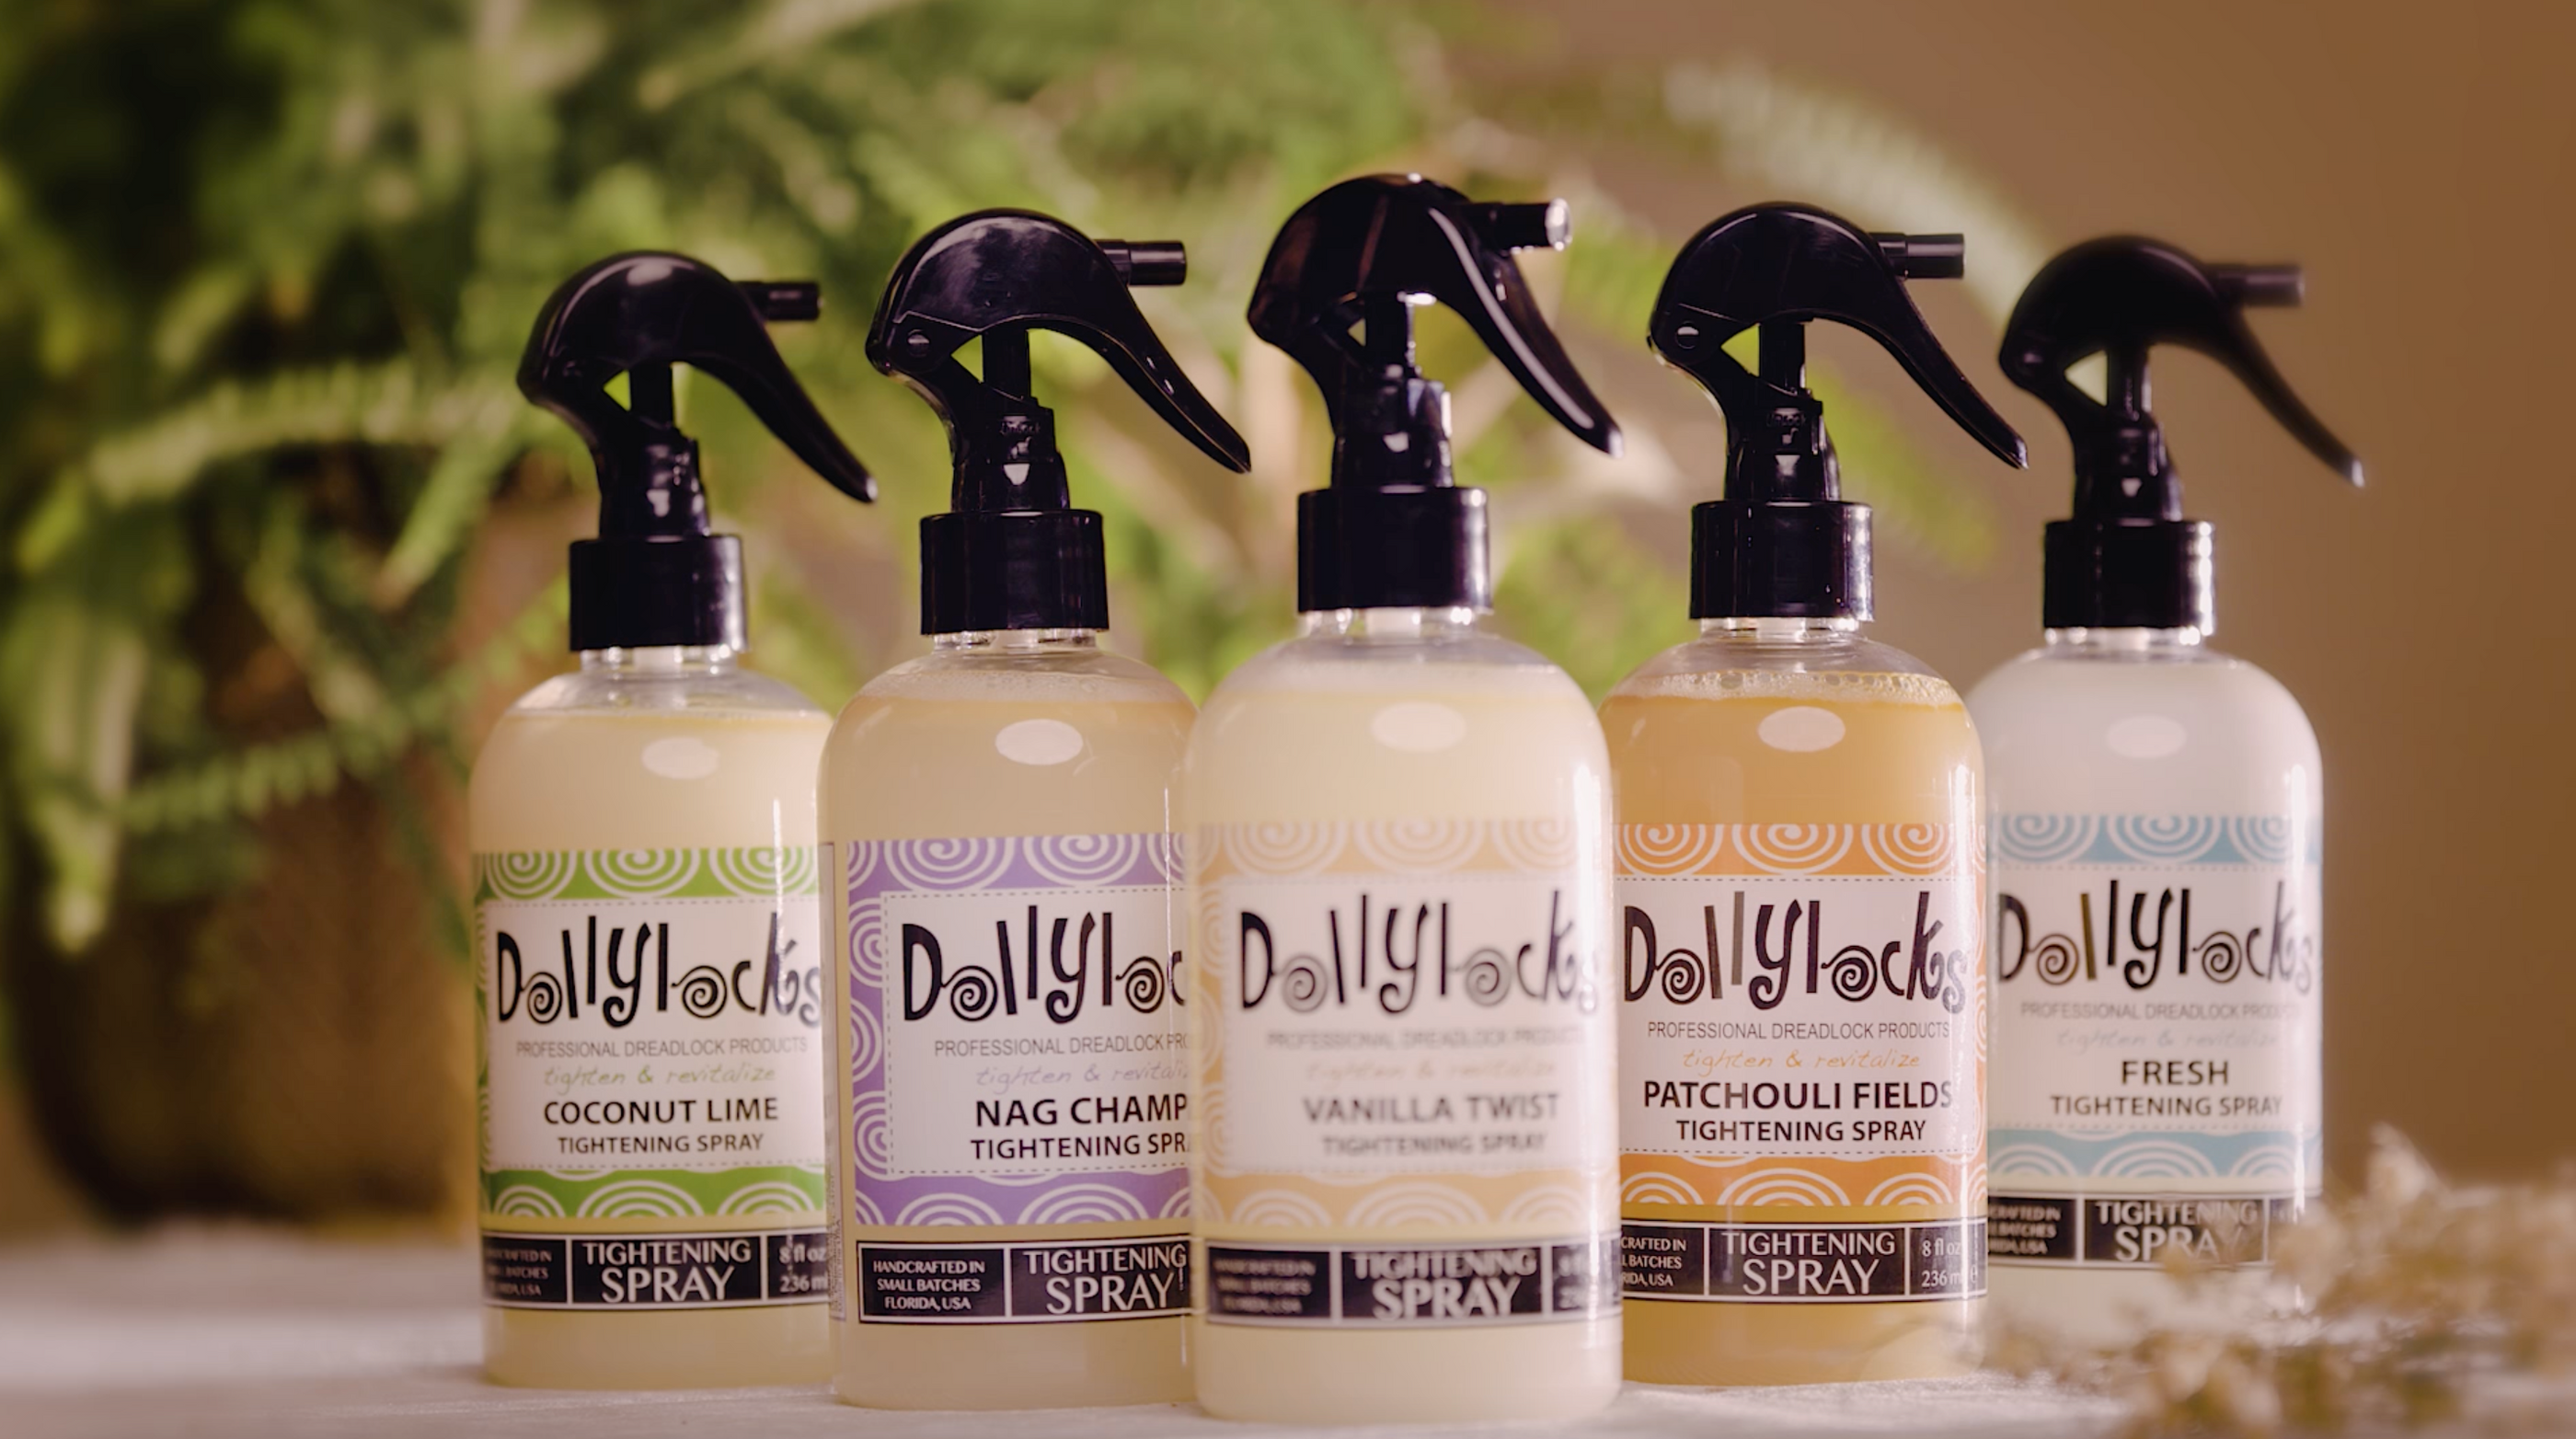 Dollylocks Professional Organic Dreadlocks Products : Tightening